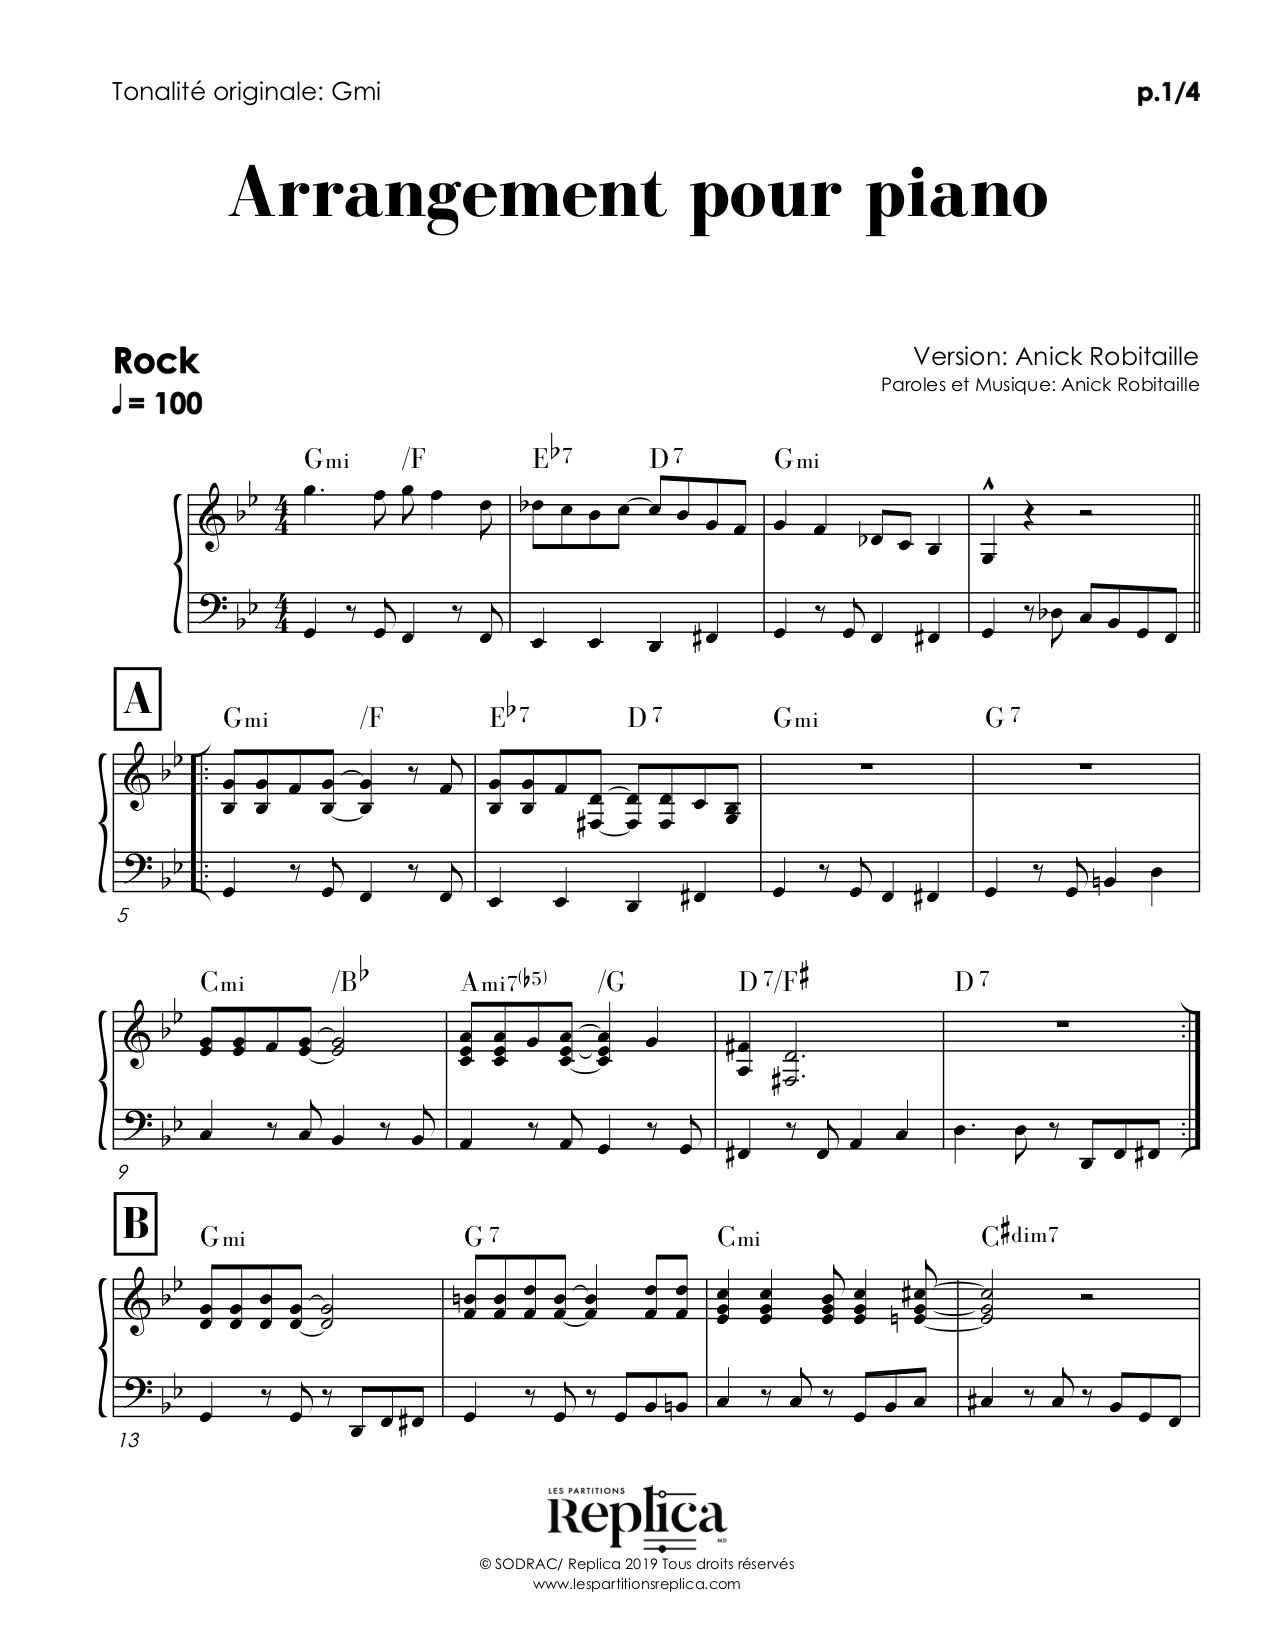 https://www.lespartitionsreplica.com/wp-content/uploads/2019/03/arrangement-piano.jpg